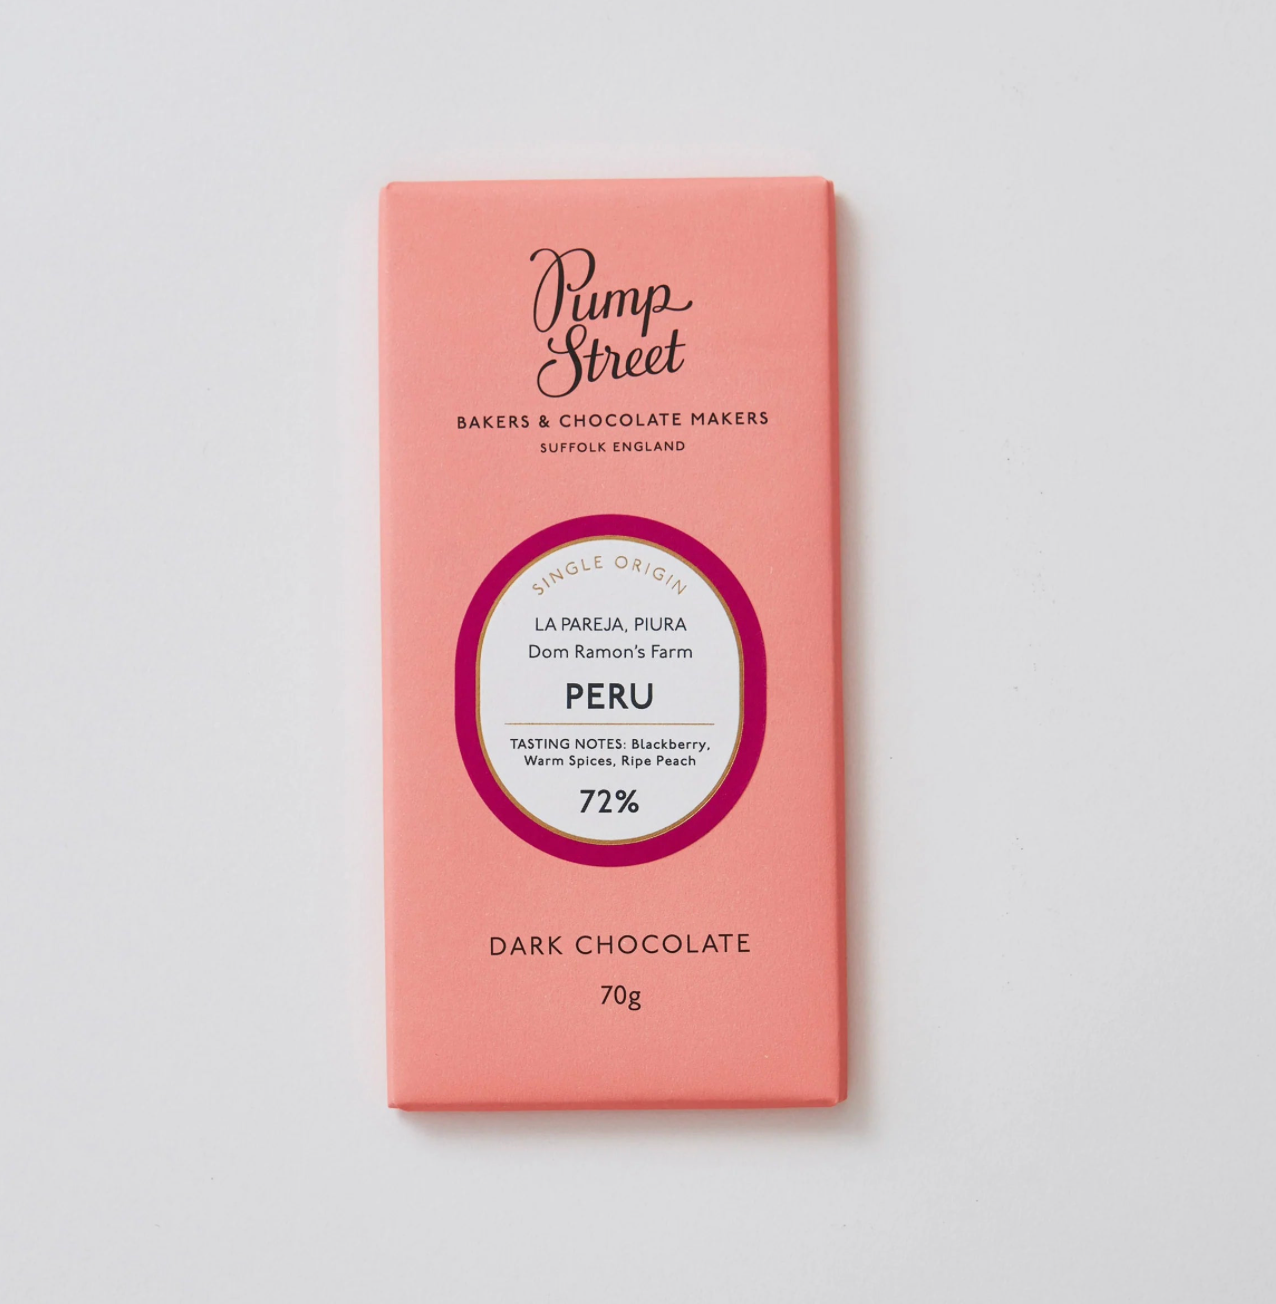 Pump Street Chocolate -Peru 72% -70g Bar